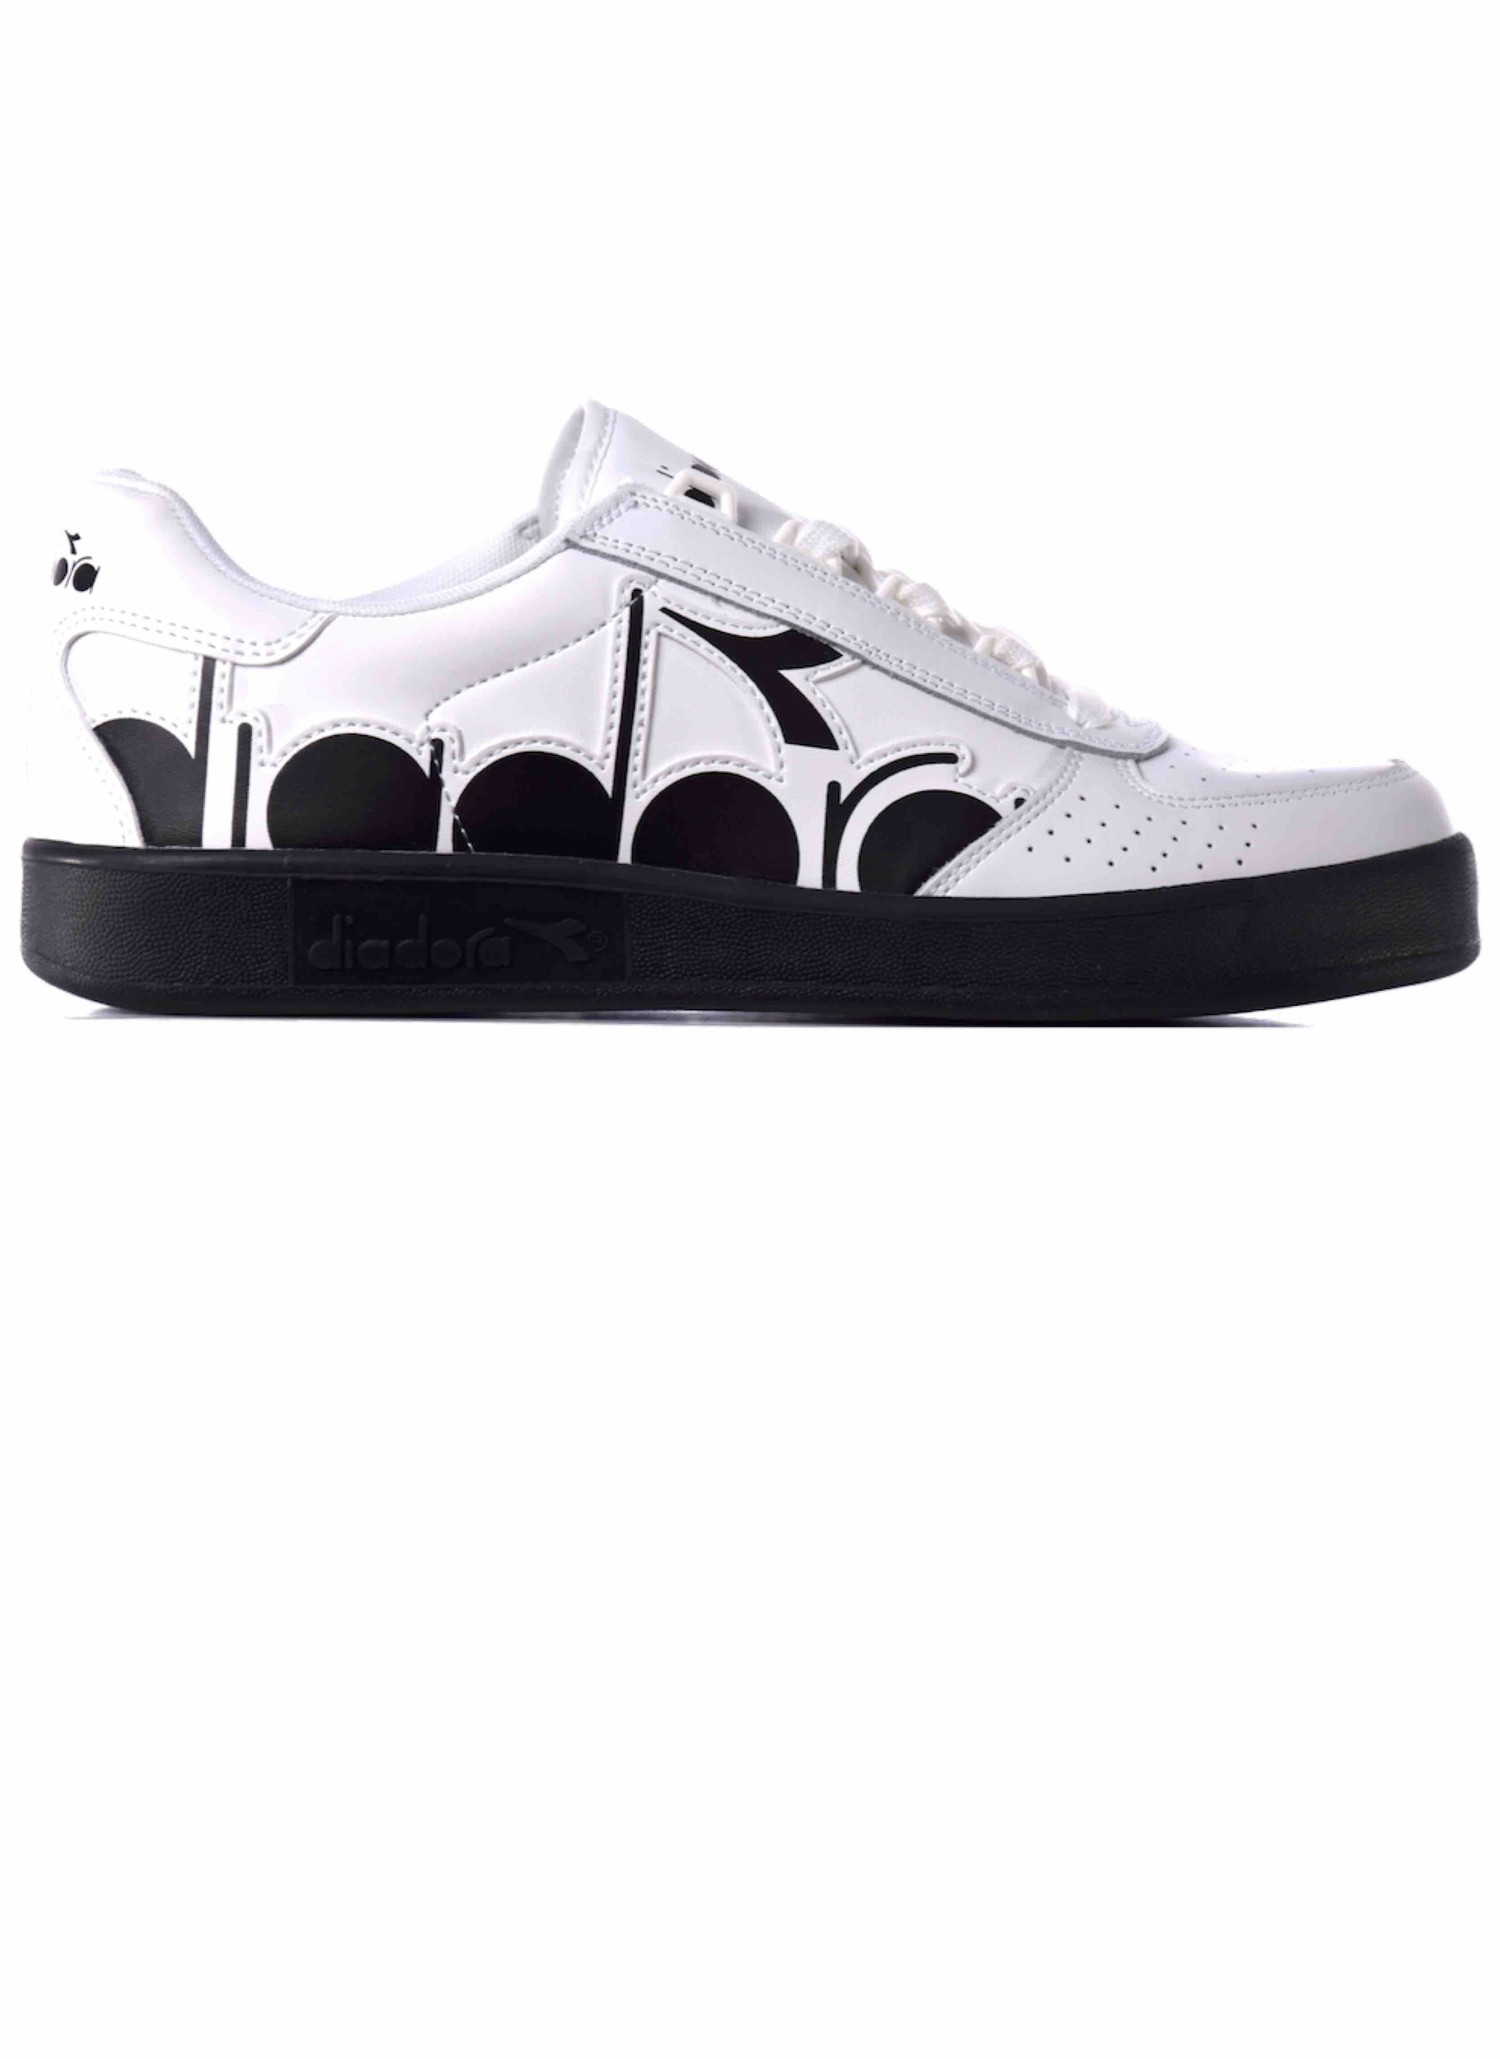 white diadora shoes